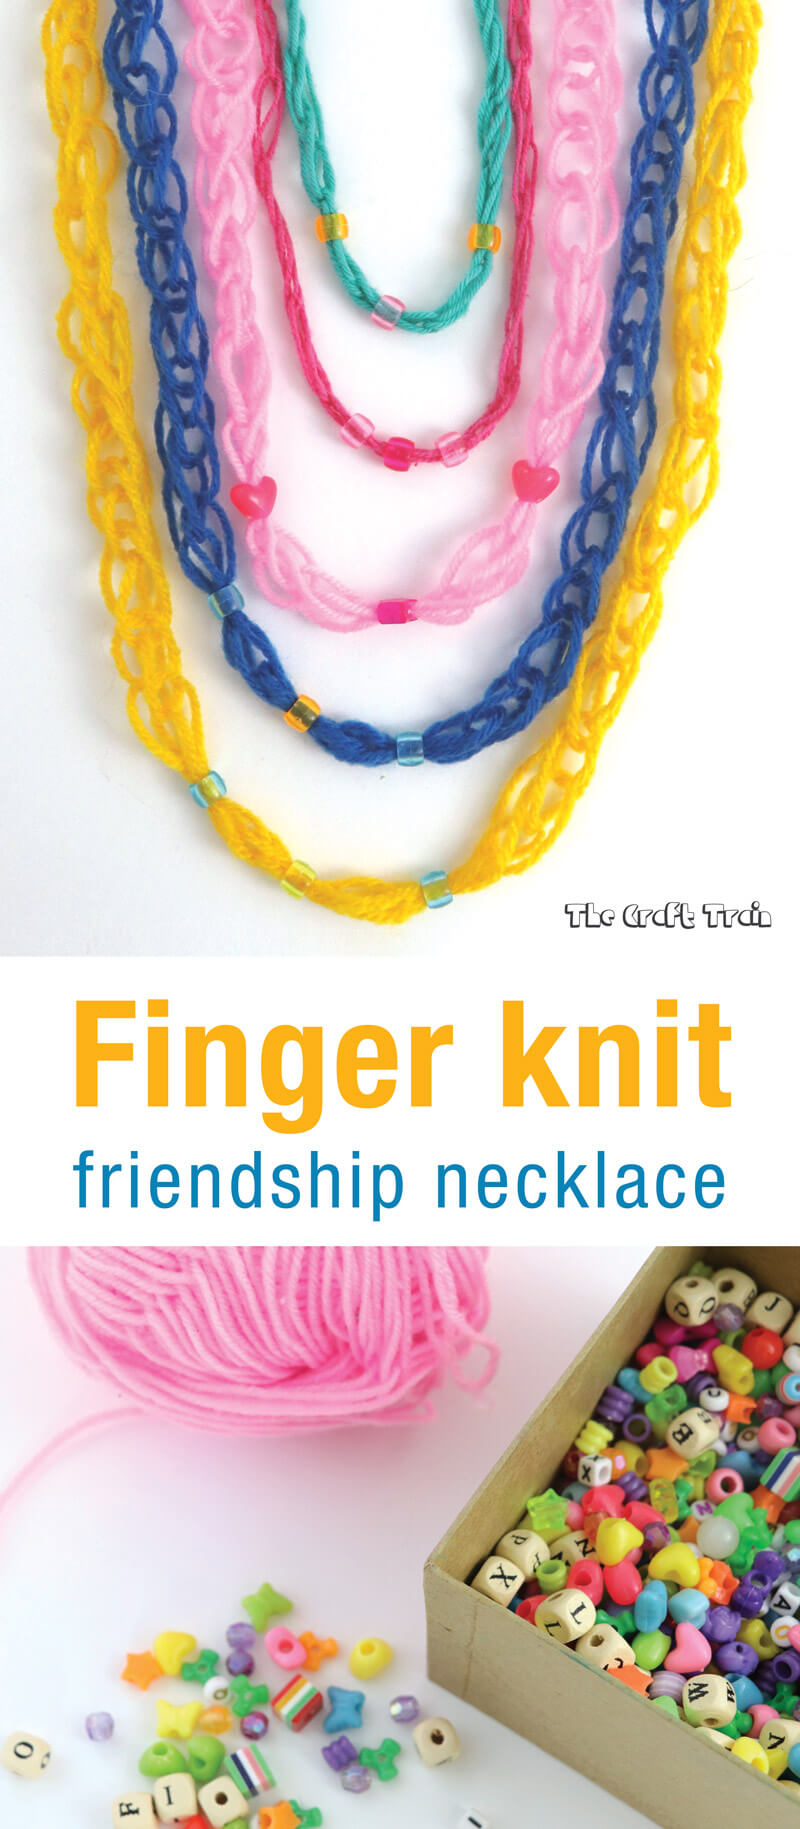 How to make a finger knit friendship necklace #yarn #yarncrafts #kidscrafts #friendship